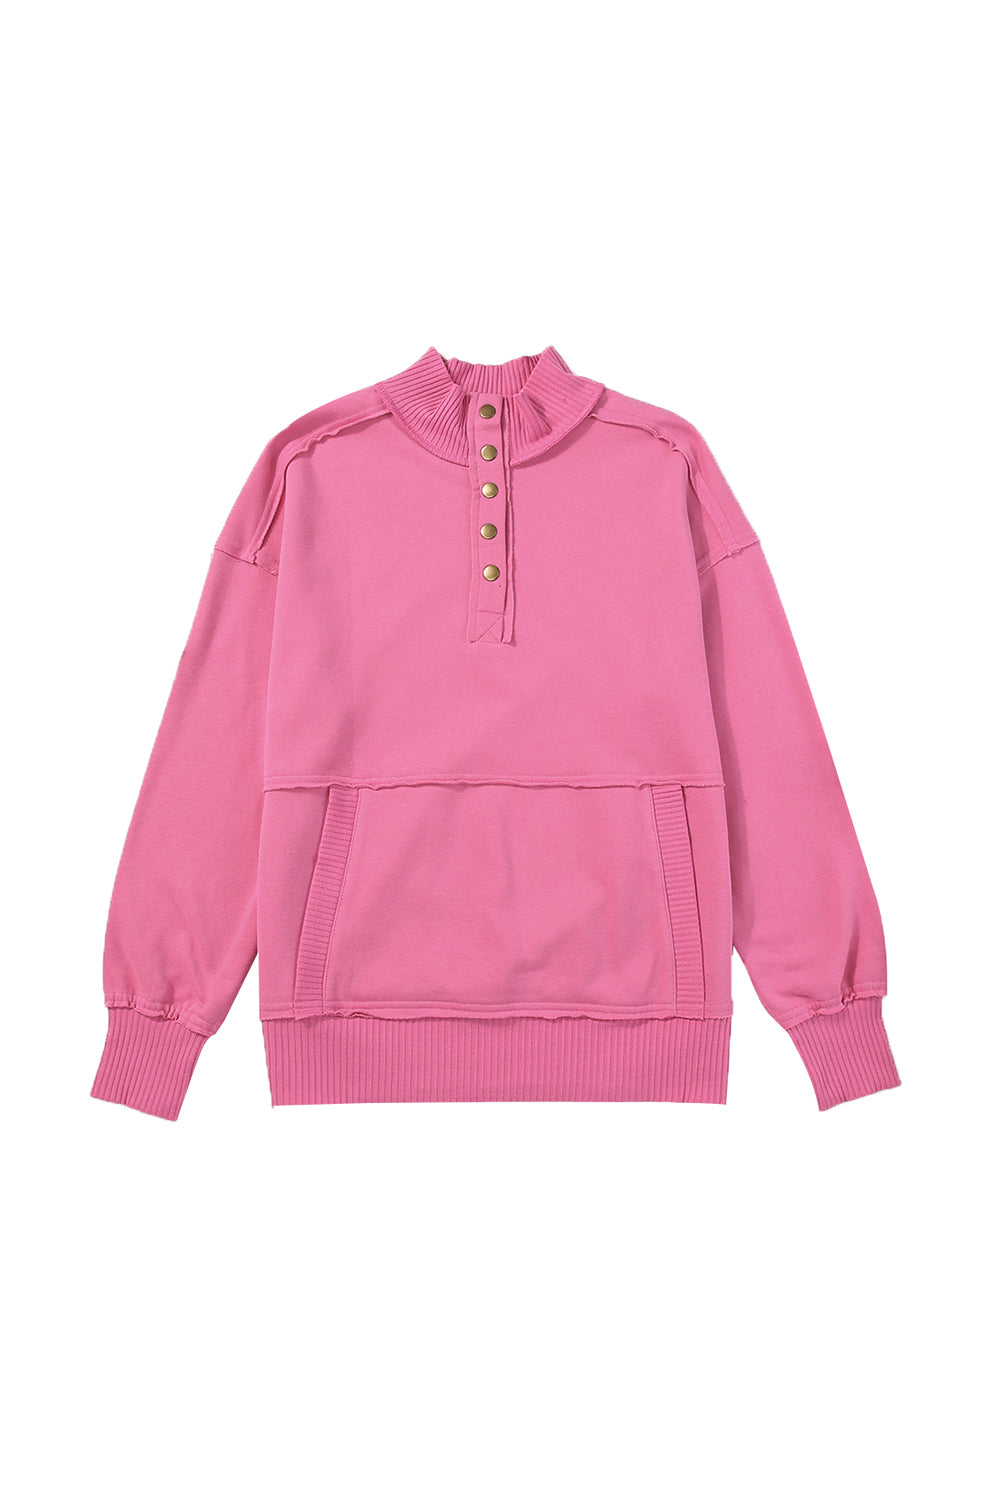 Bright Pink Ribbed Hem Snap Button Neckline Sweatshirt with Pocket